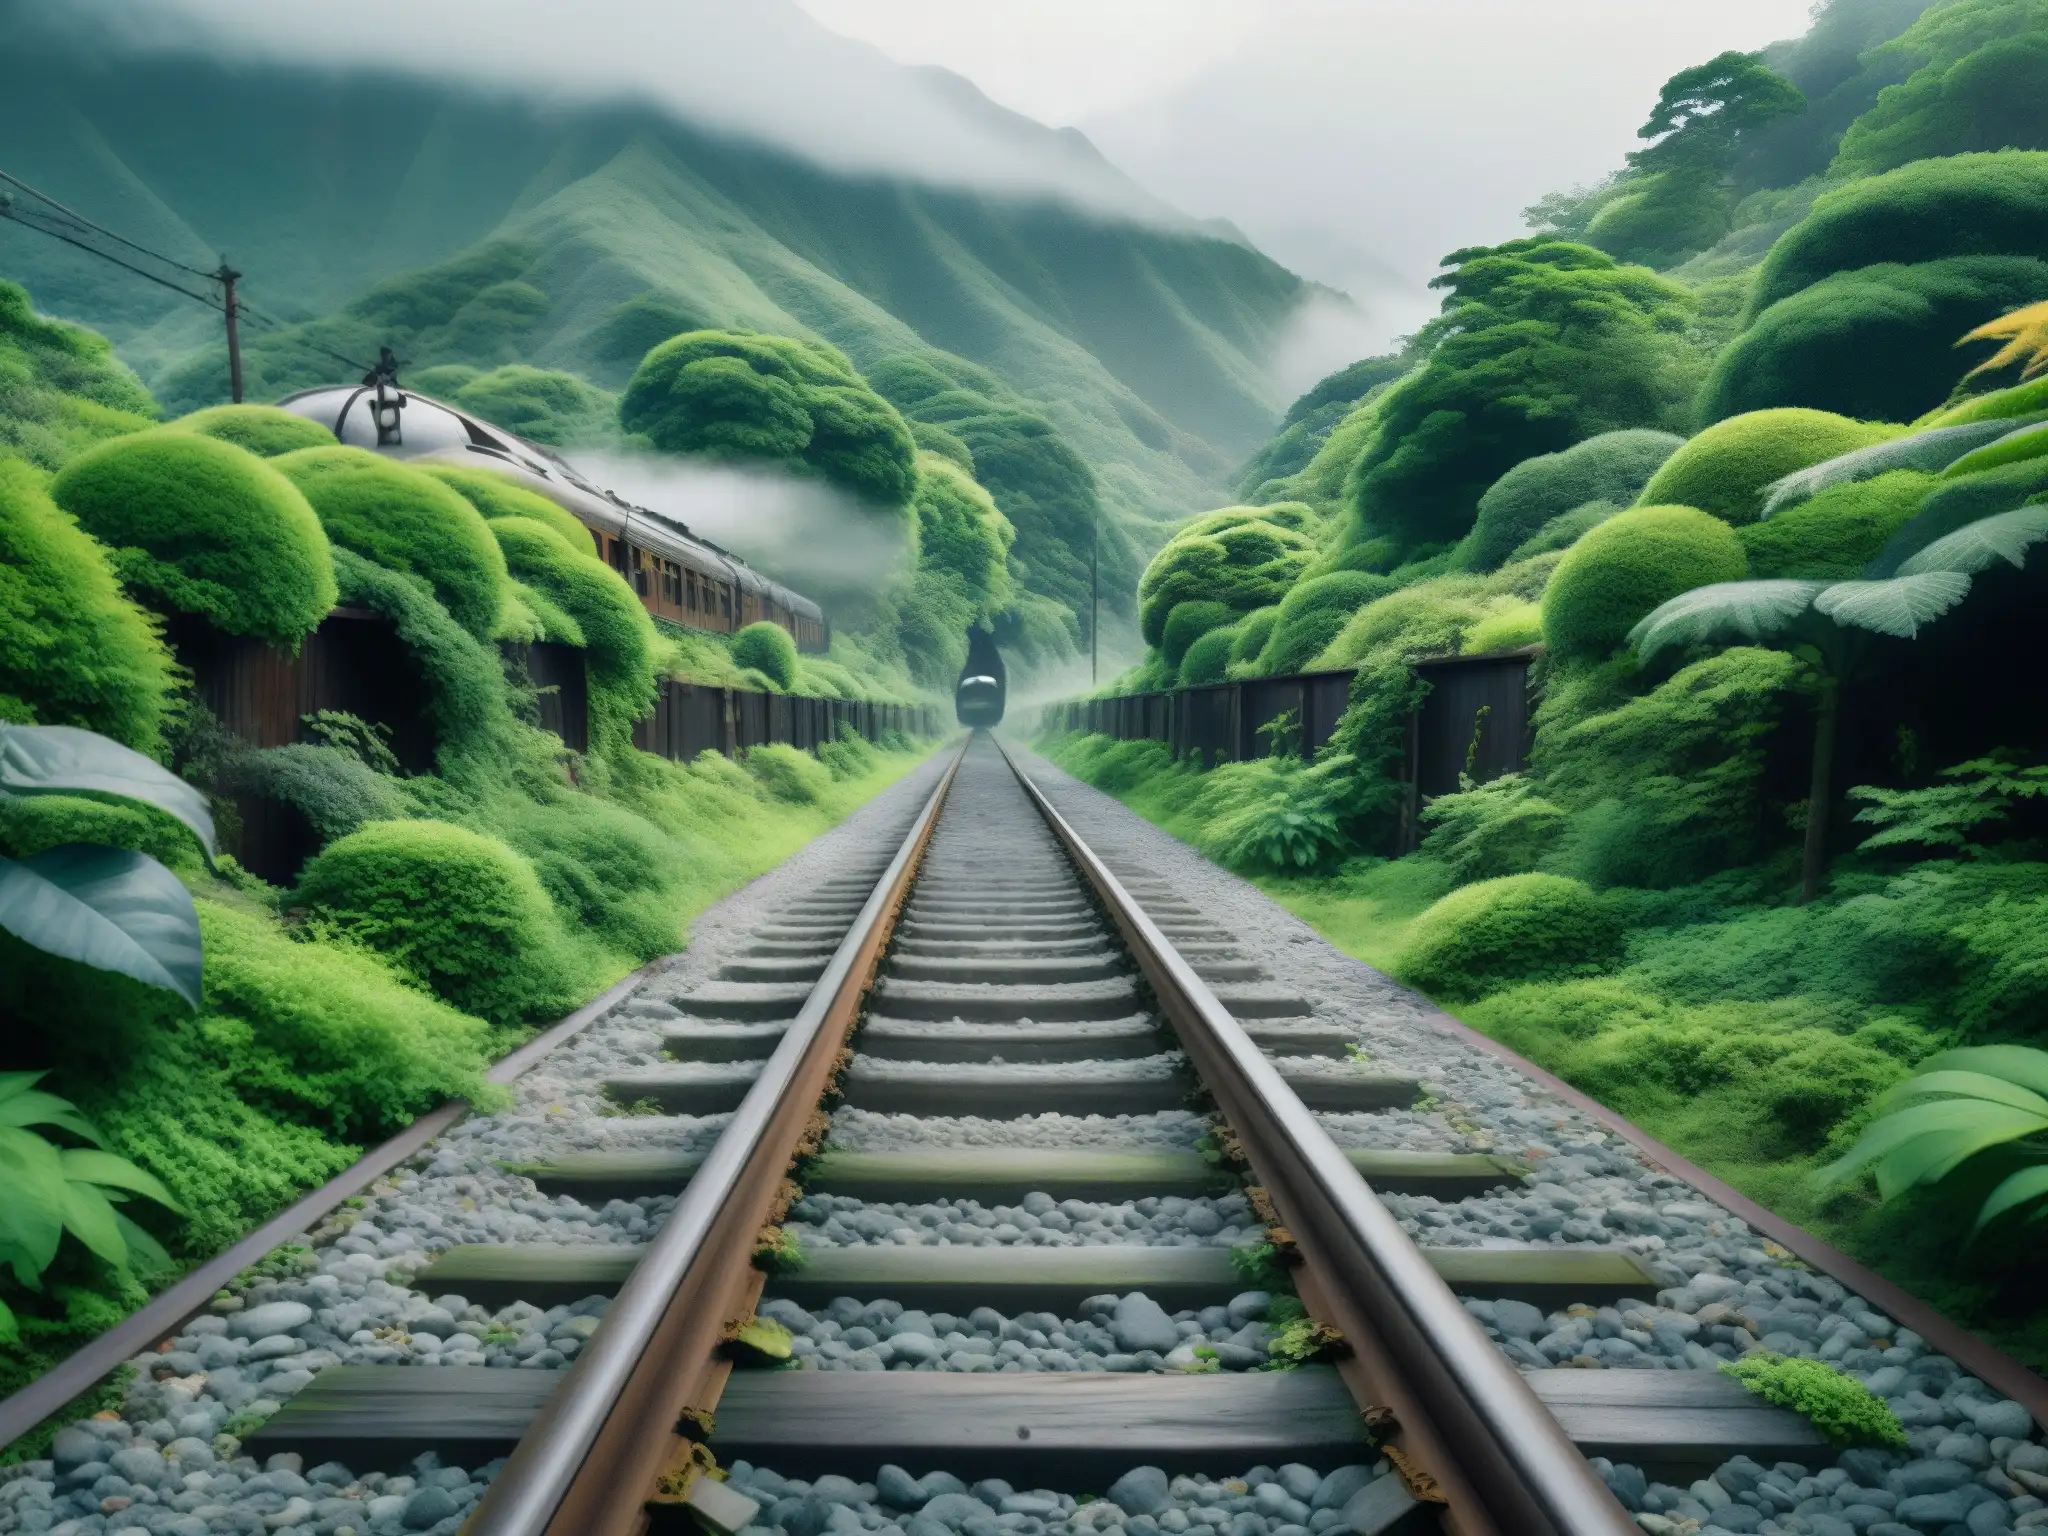 Tren fantasma Japón: vías abandonadas, montañas brumosas y atmósfera misteriosa evocan la legendaria leyenda